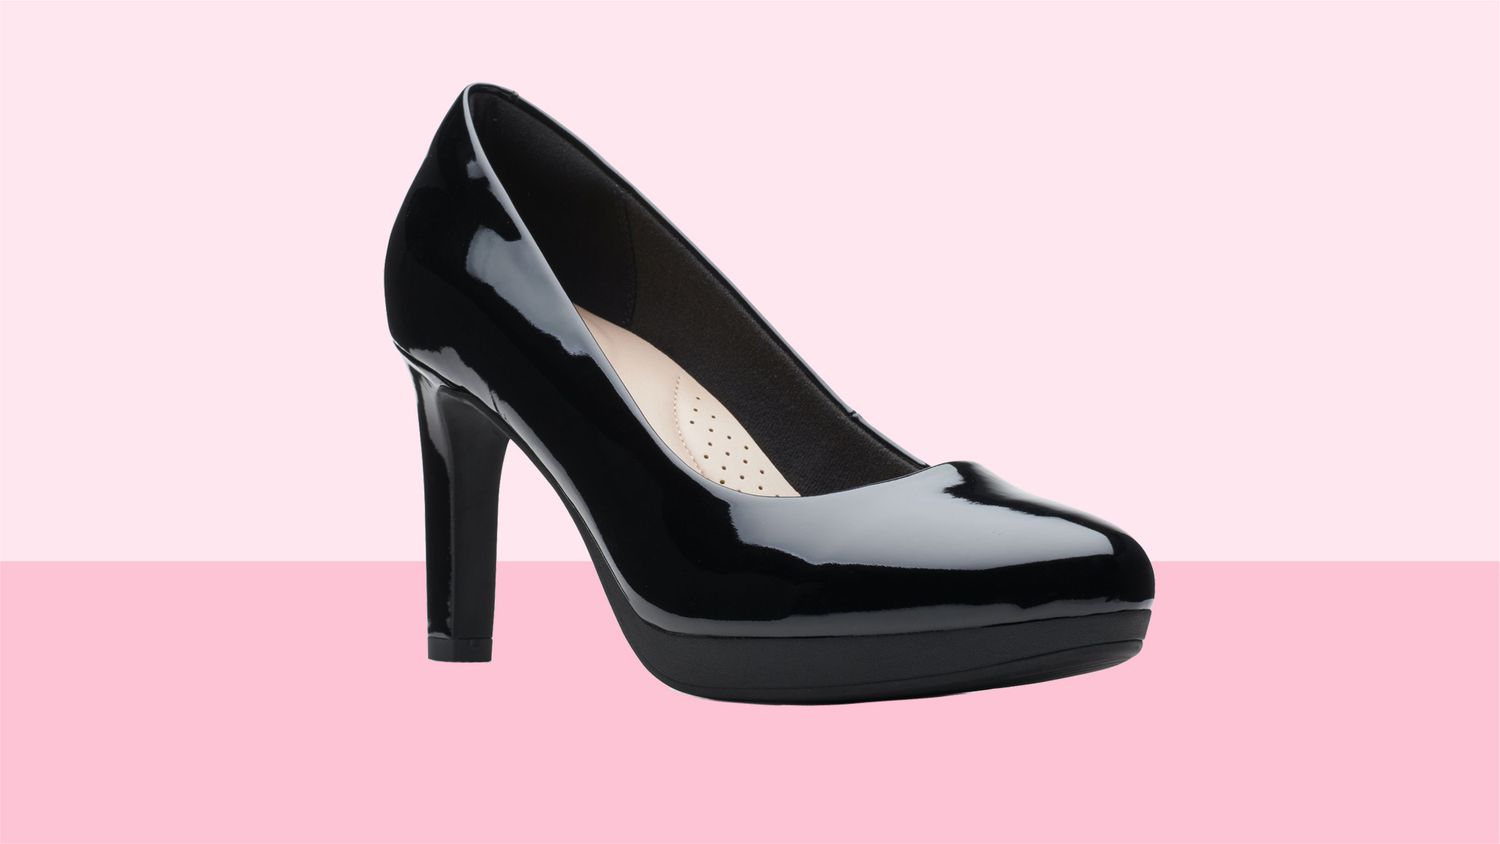 most comfortable heels: Clarks Ambyr Joy Black Patent Heel